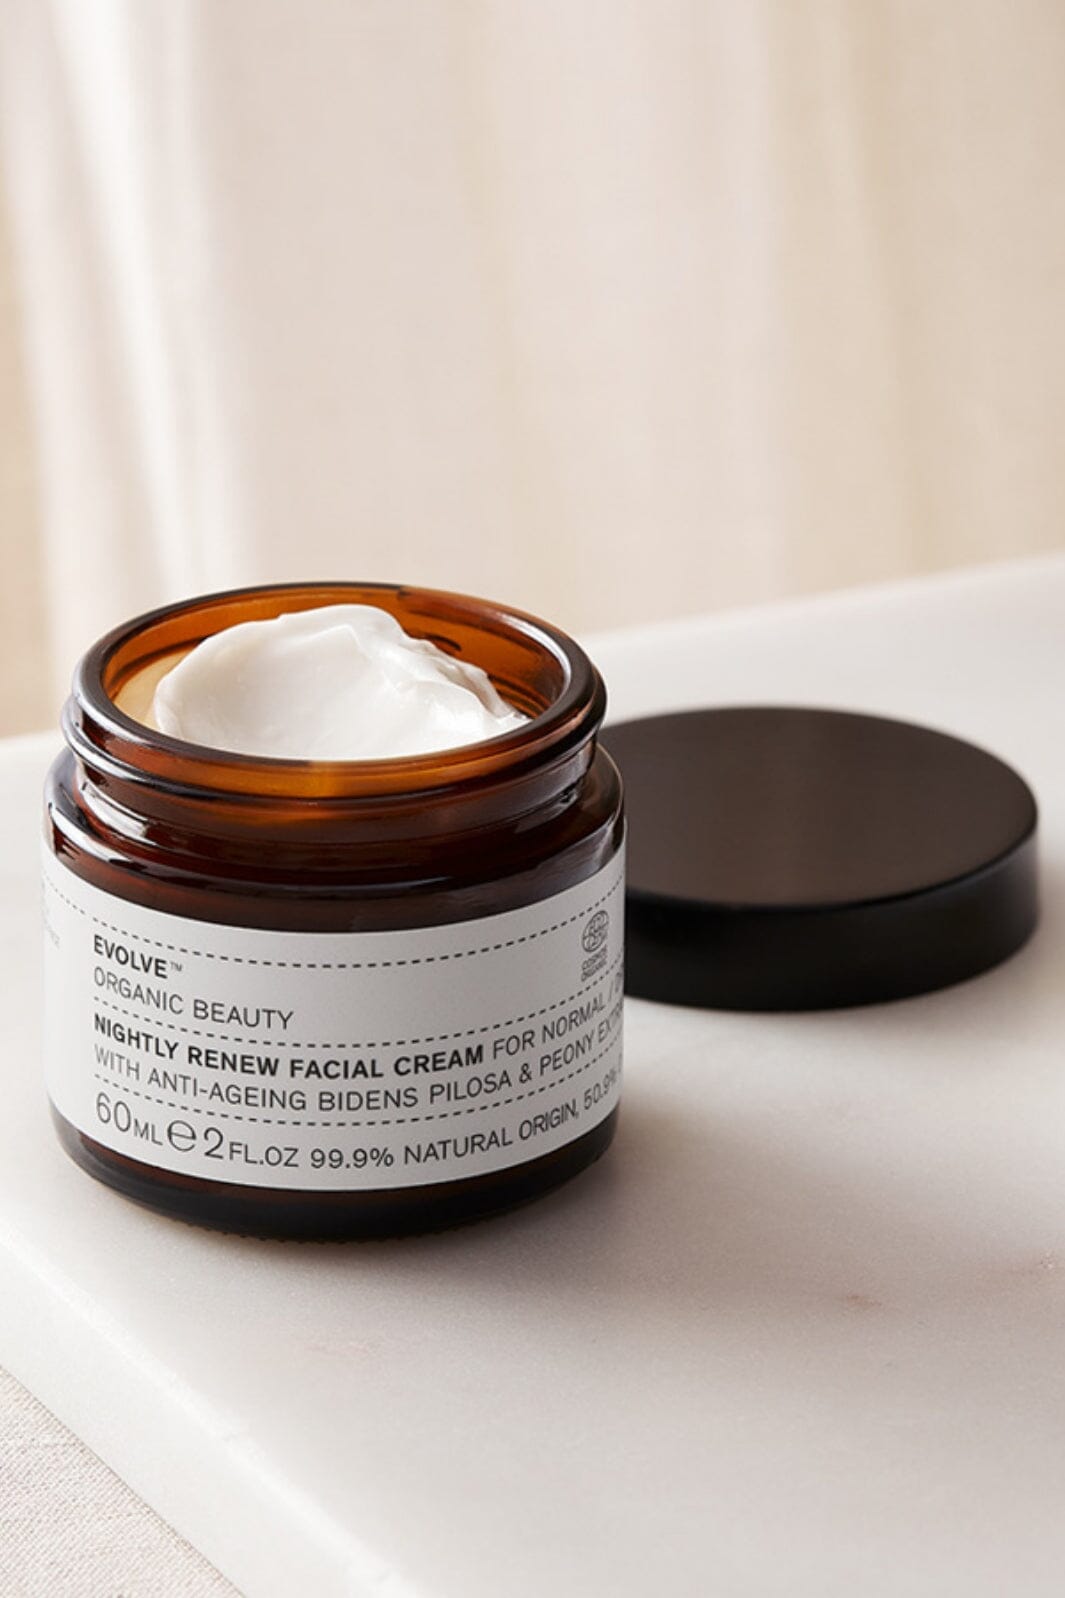 Evolve - Nightly Renew Facial Cream, 60 ml Creme 